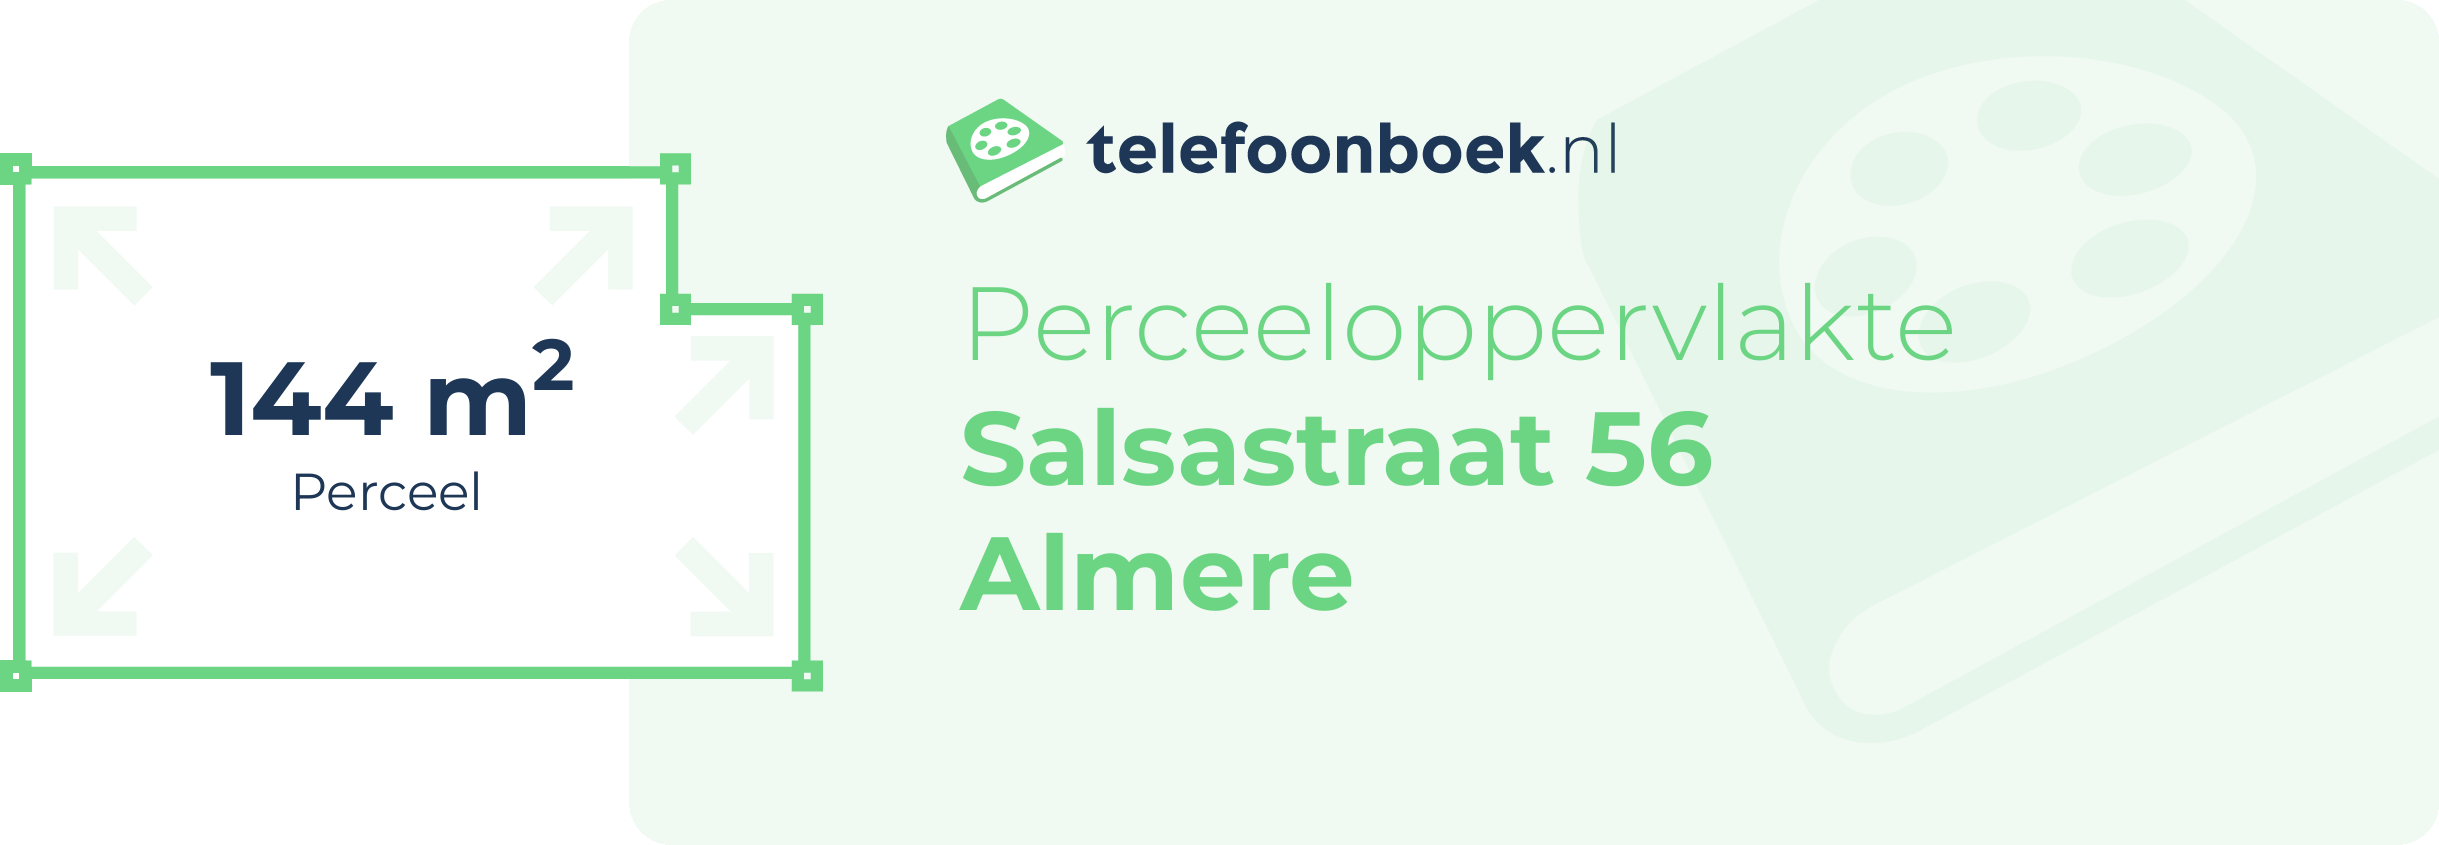 Perceeloppervlakte Salsastraat 56 Almere